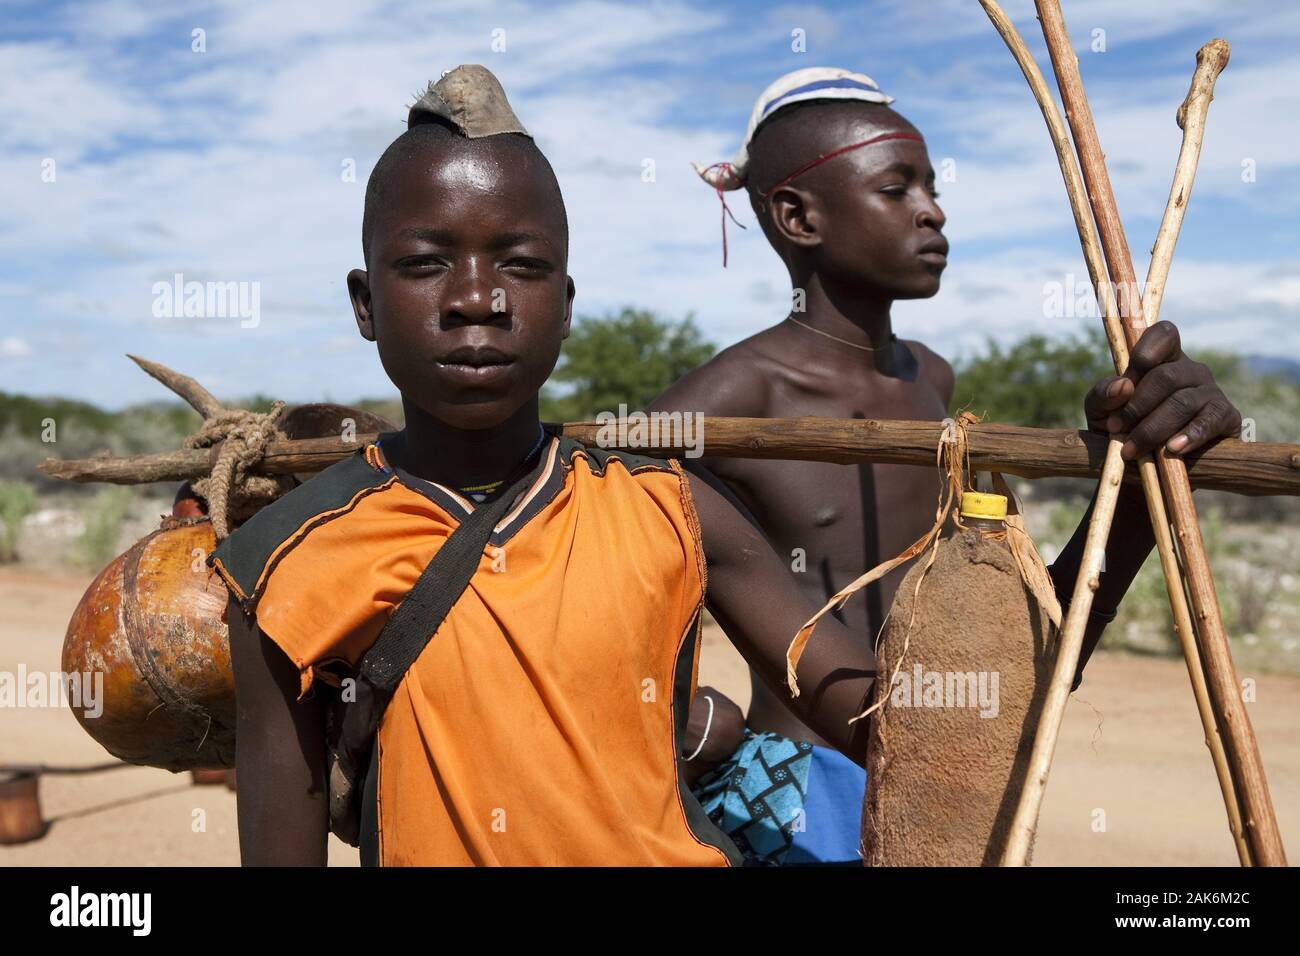 Namibie : junge Himba-Maenner Nordwesten Kaokoveld gi, Namibie | conditions dans le monde entier Banque D'Images